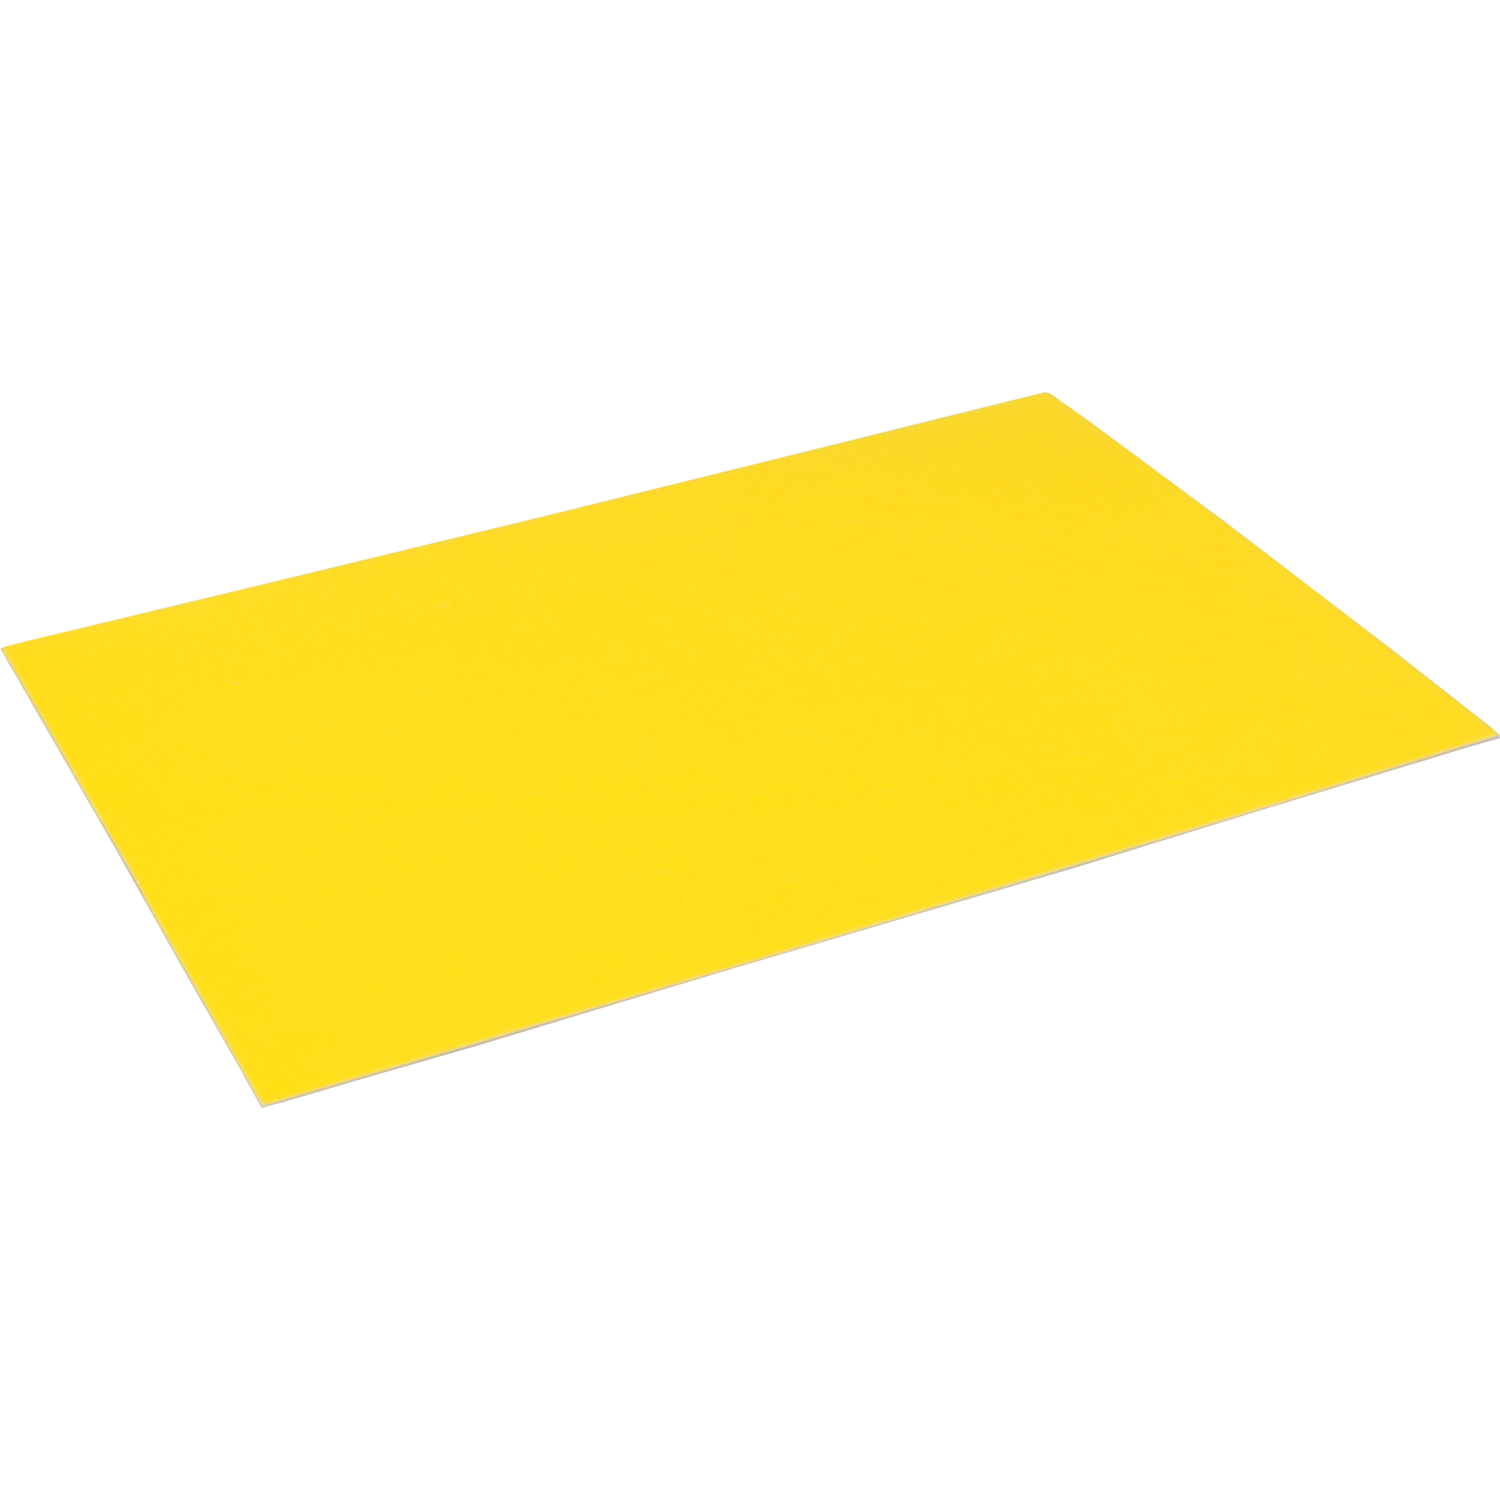 Prijskaart etalagekarton, 17x12cm, karton, jaune 1